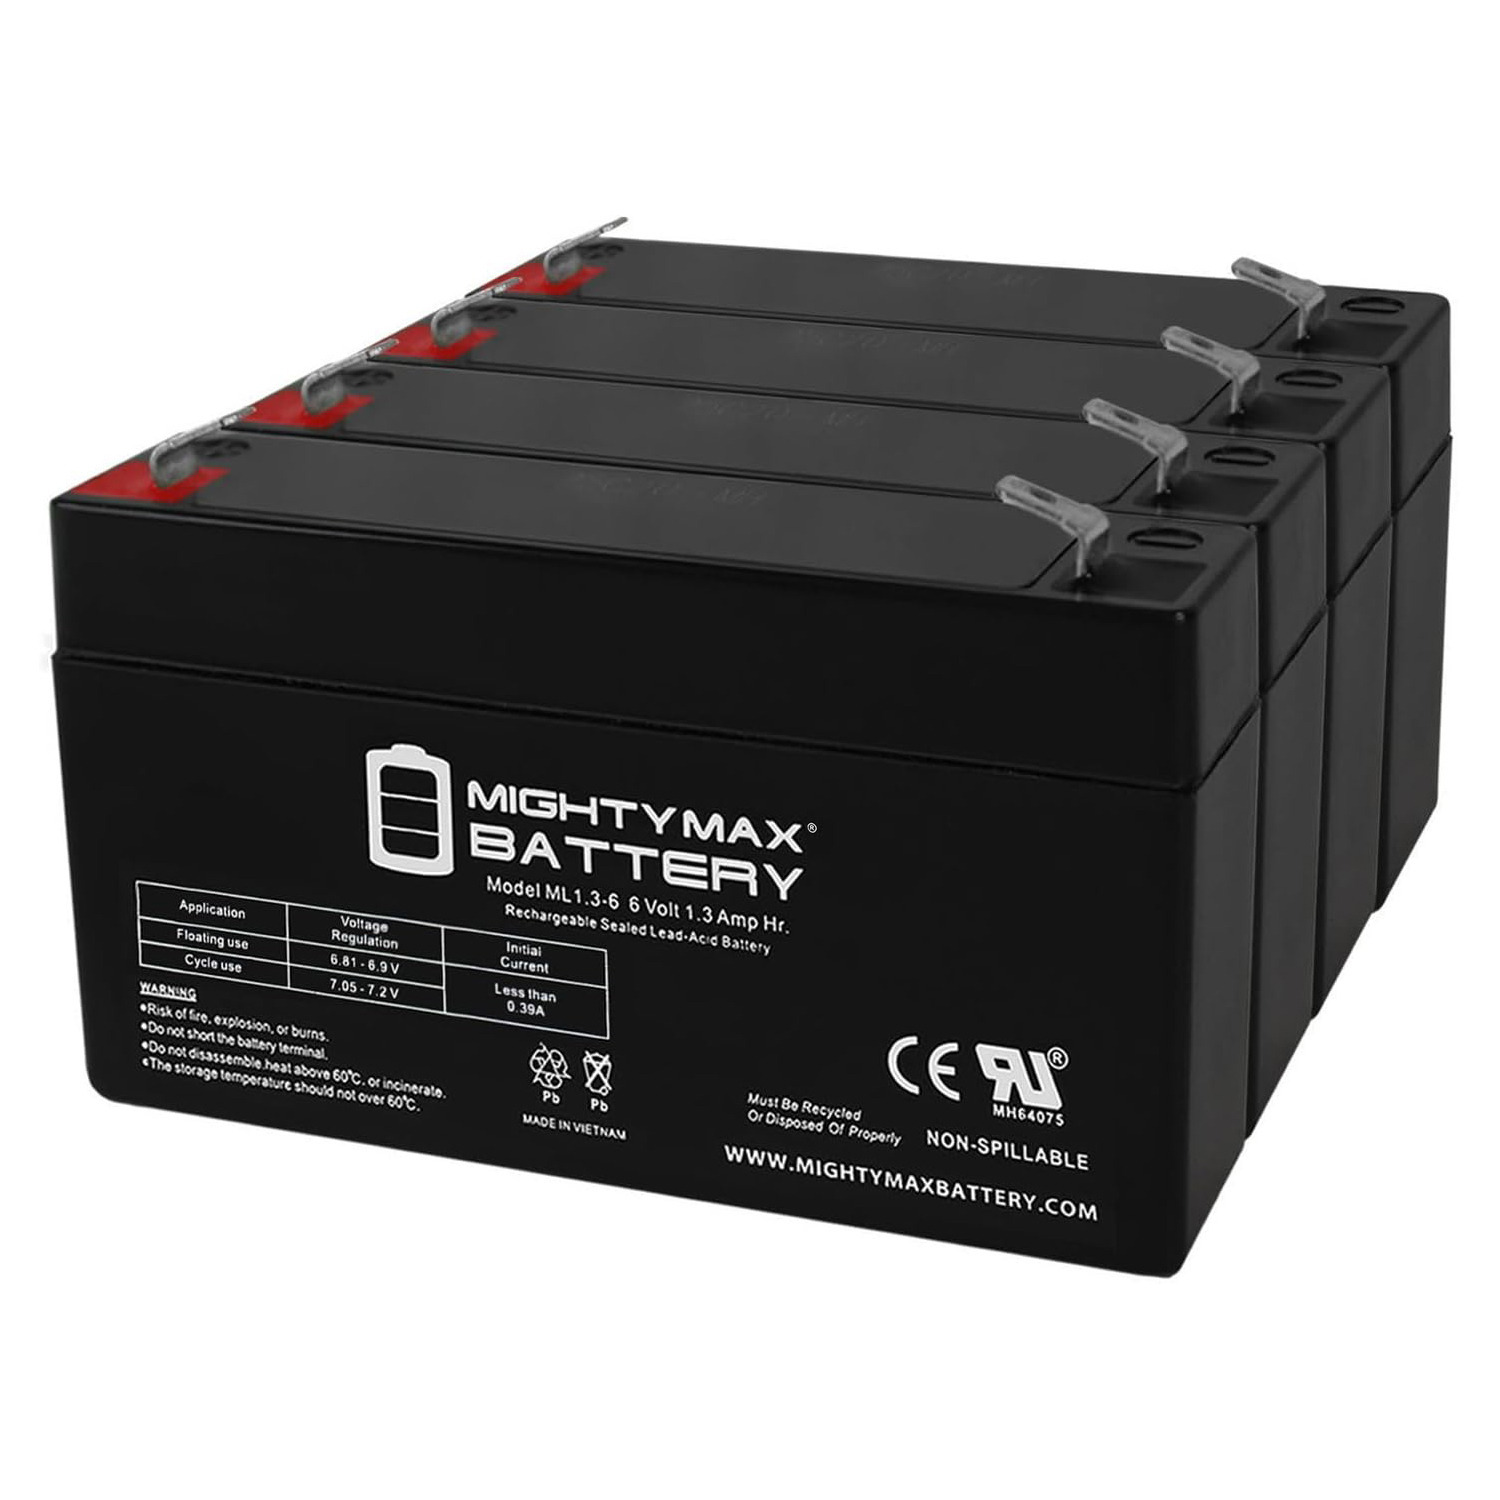 6V 1.3Ah Mule 6GC004A Emergency Light Battery - 4 Pack